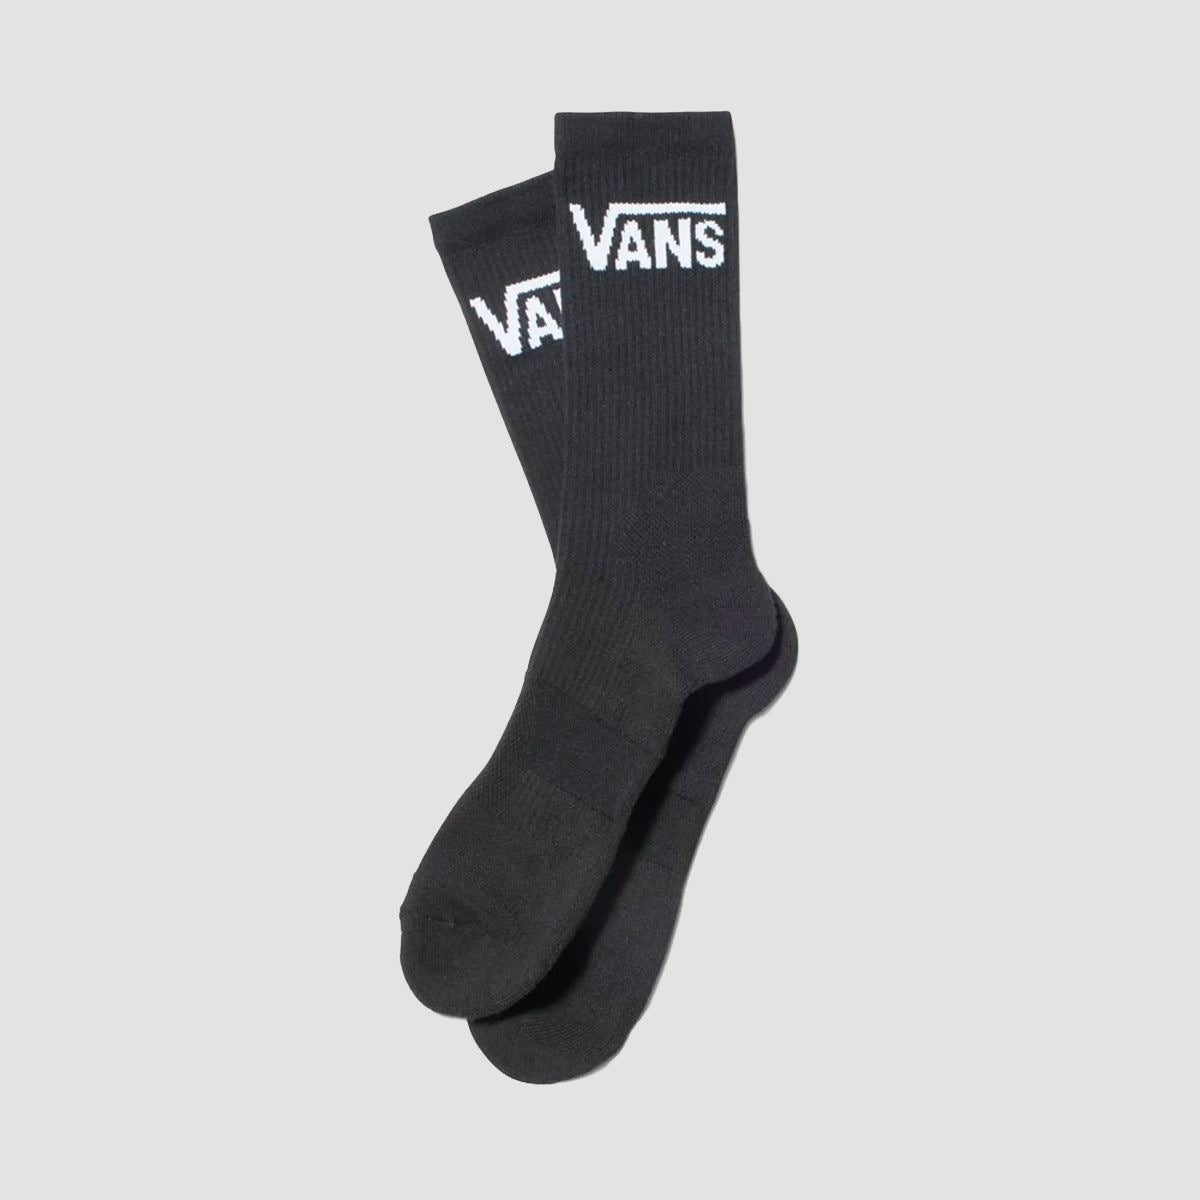 Vans Skate Crew Socks Black